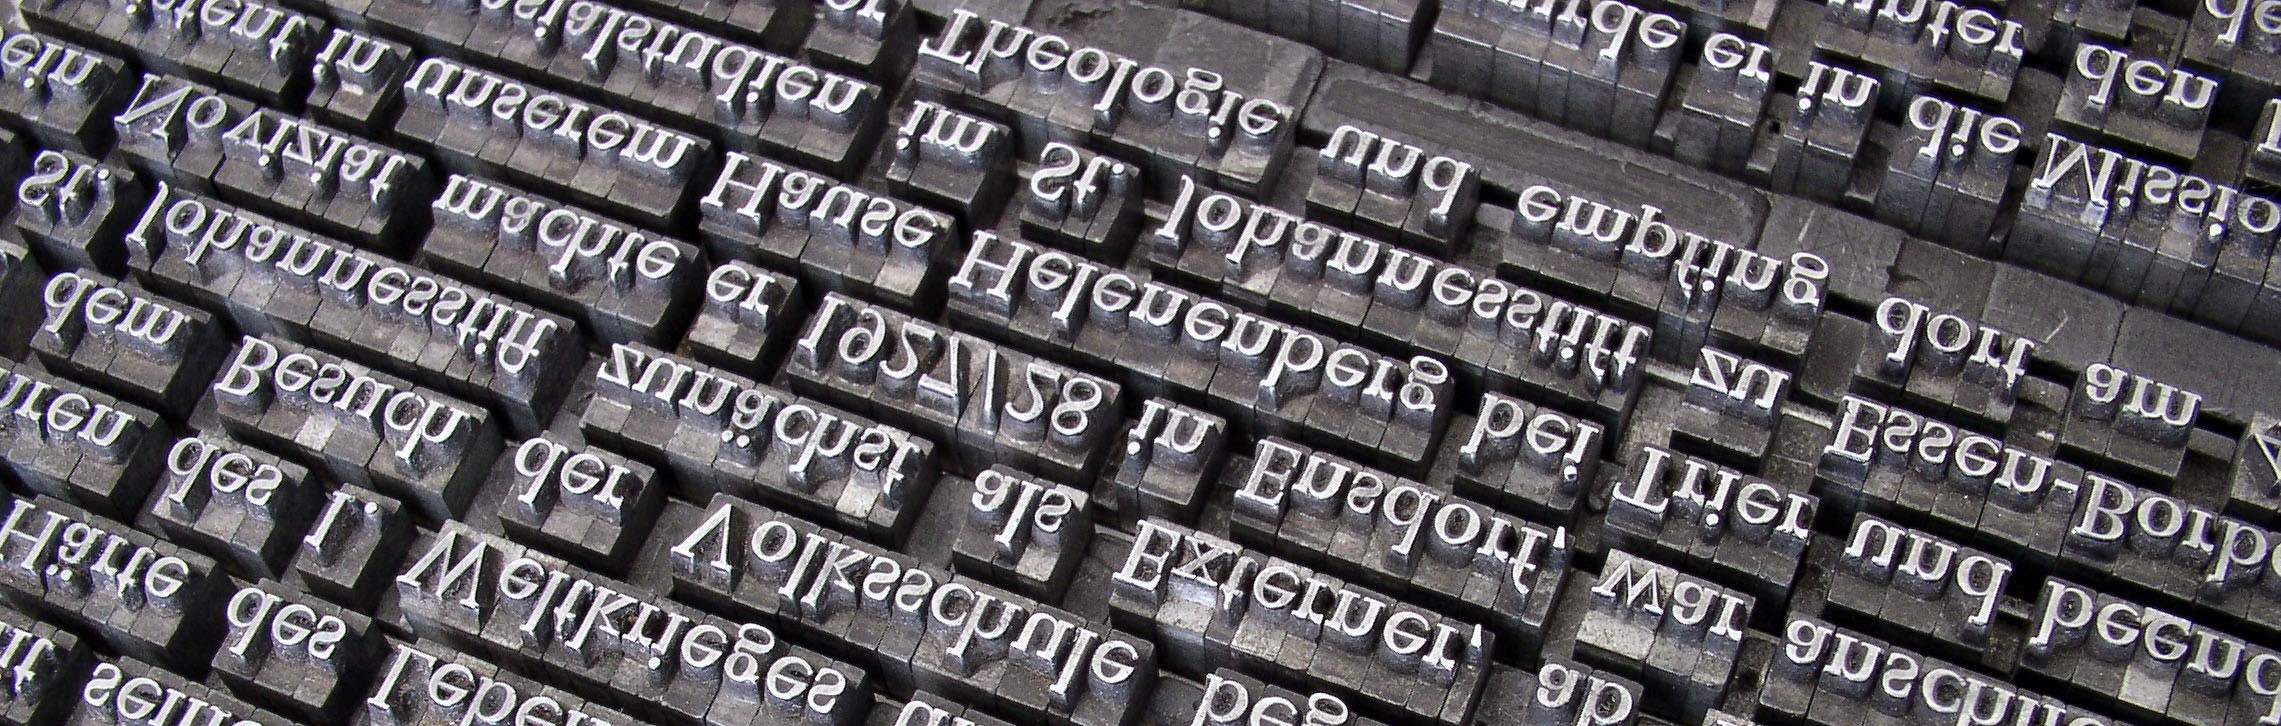 Gutenberg printing press letters